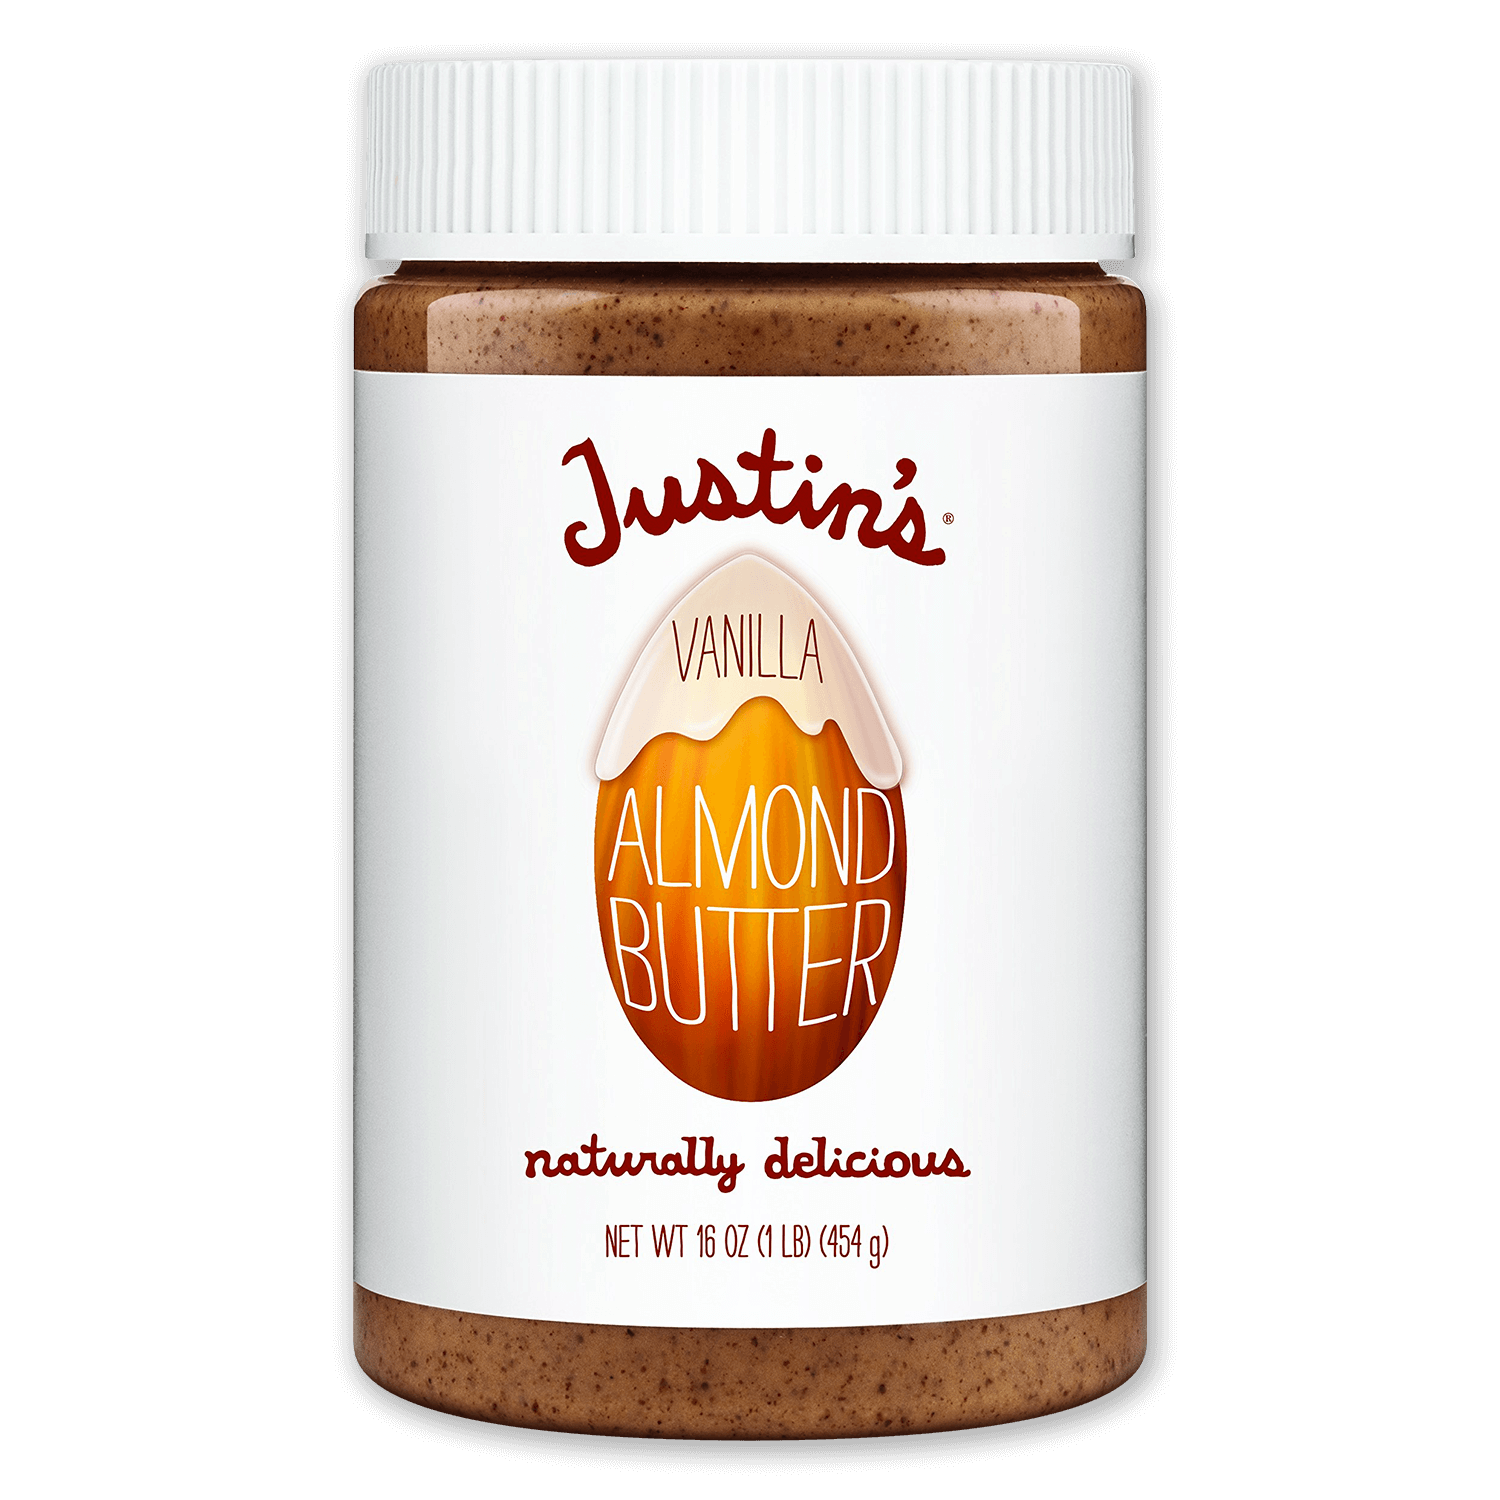 Justin's Vanilla Almond Butter Spread jar 16 oz.